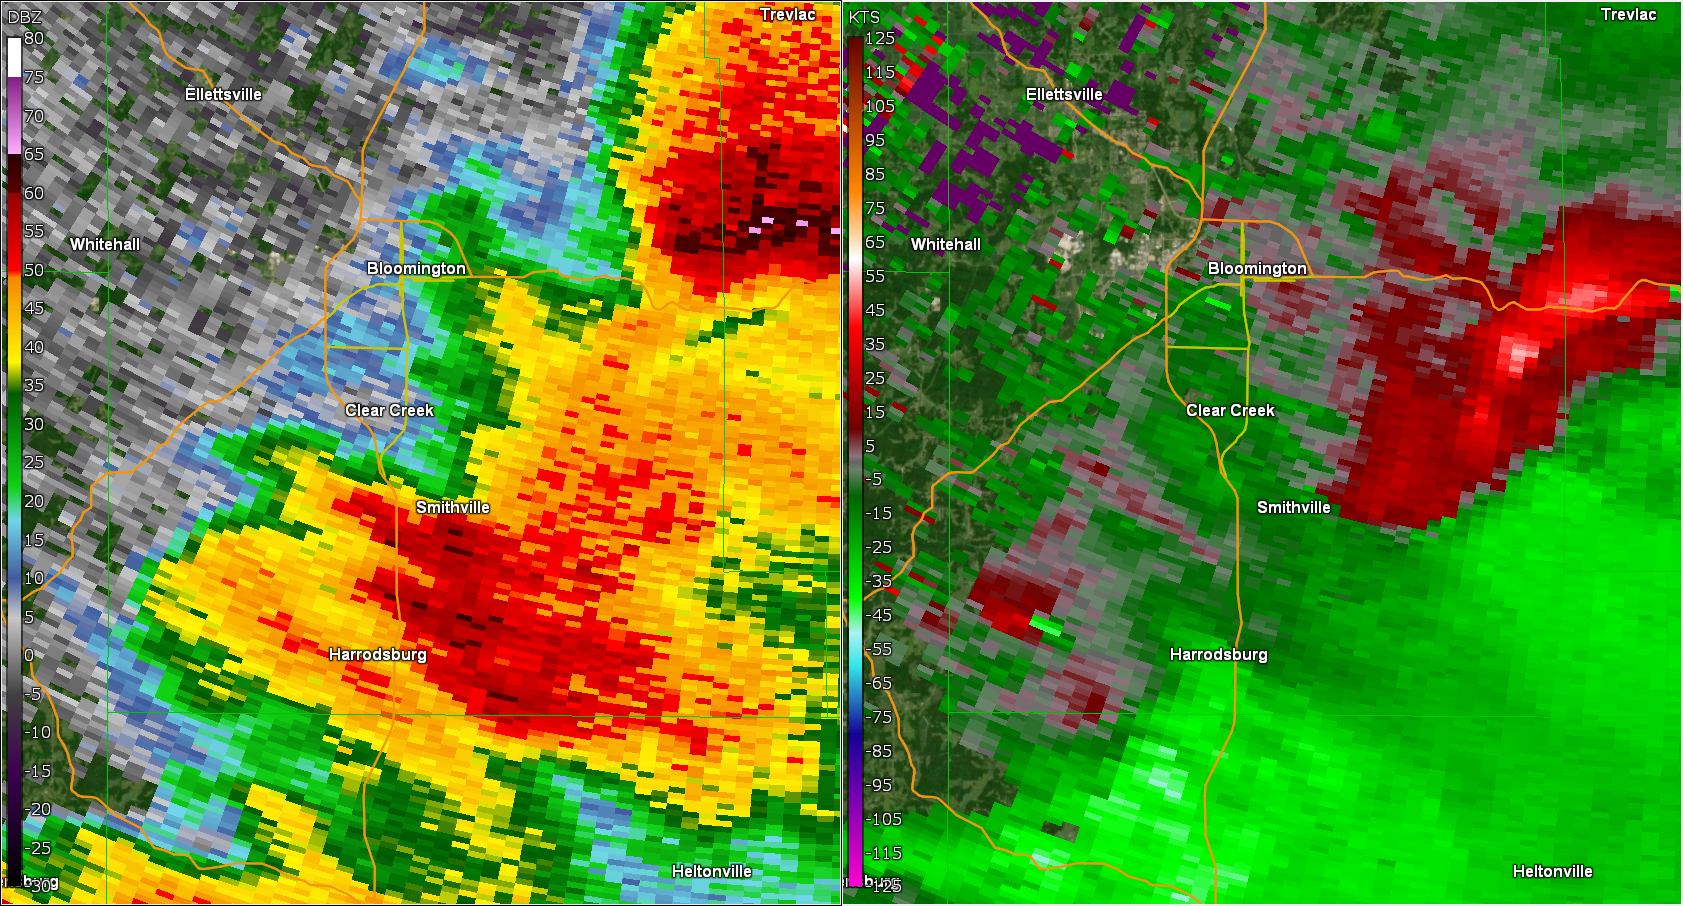 Radar/Storm Relative Velocity Image